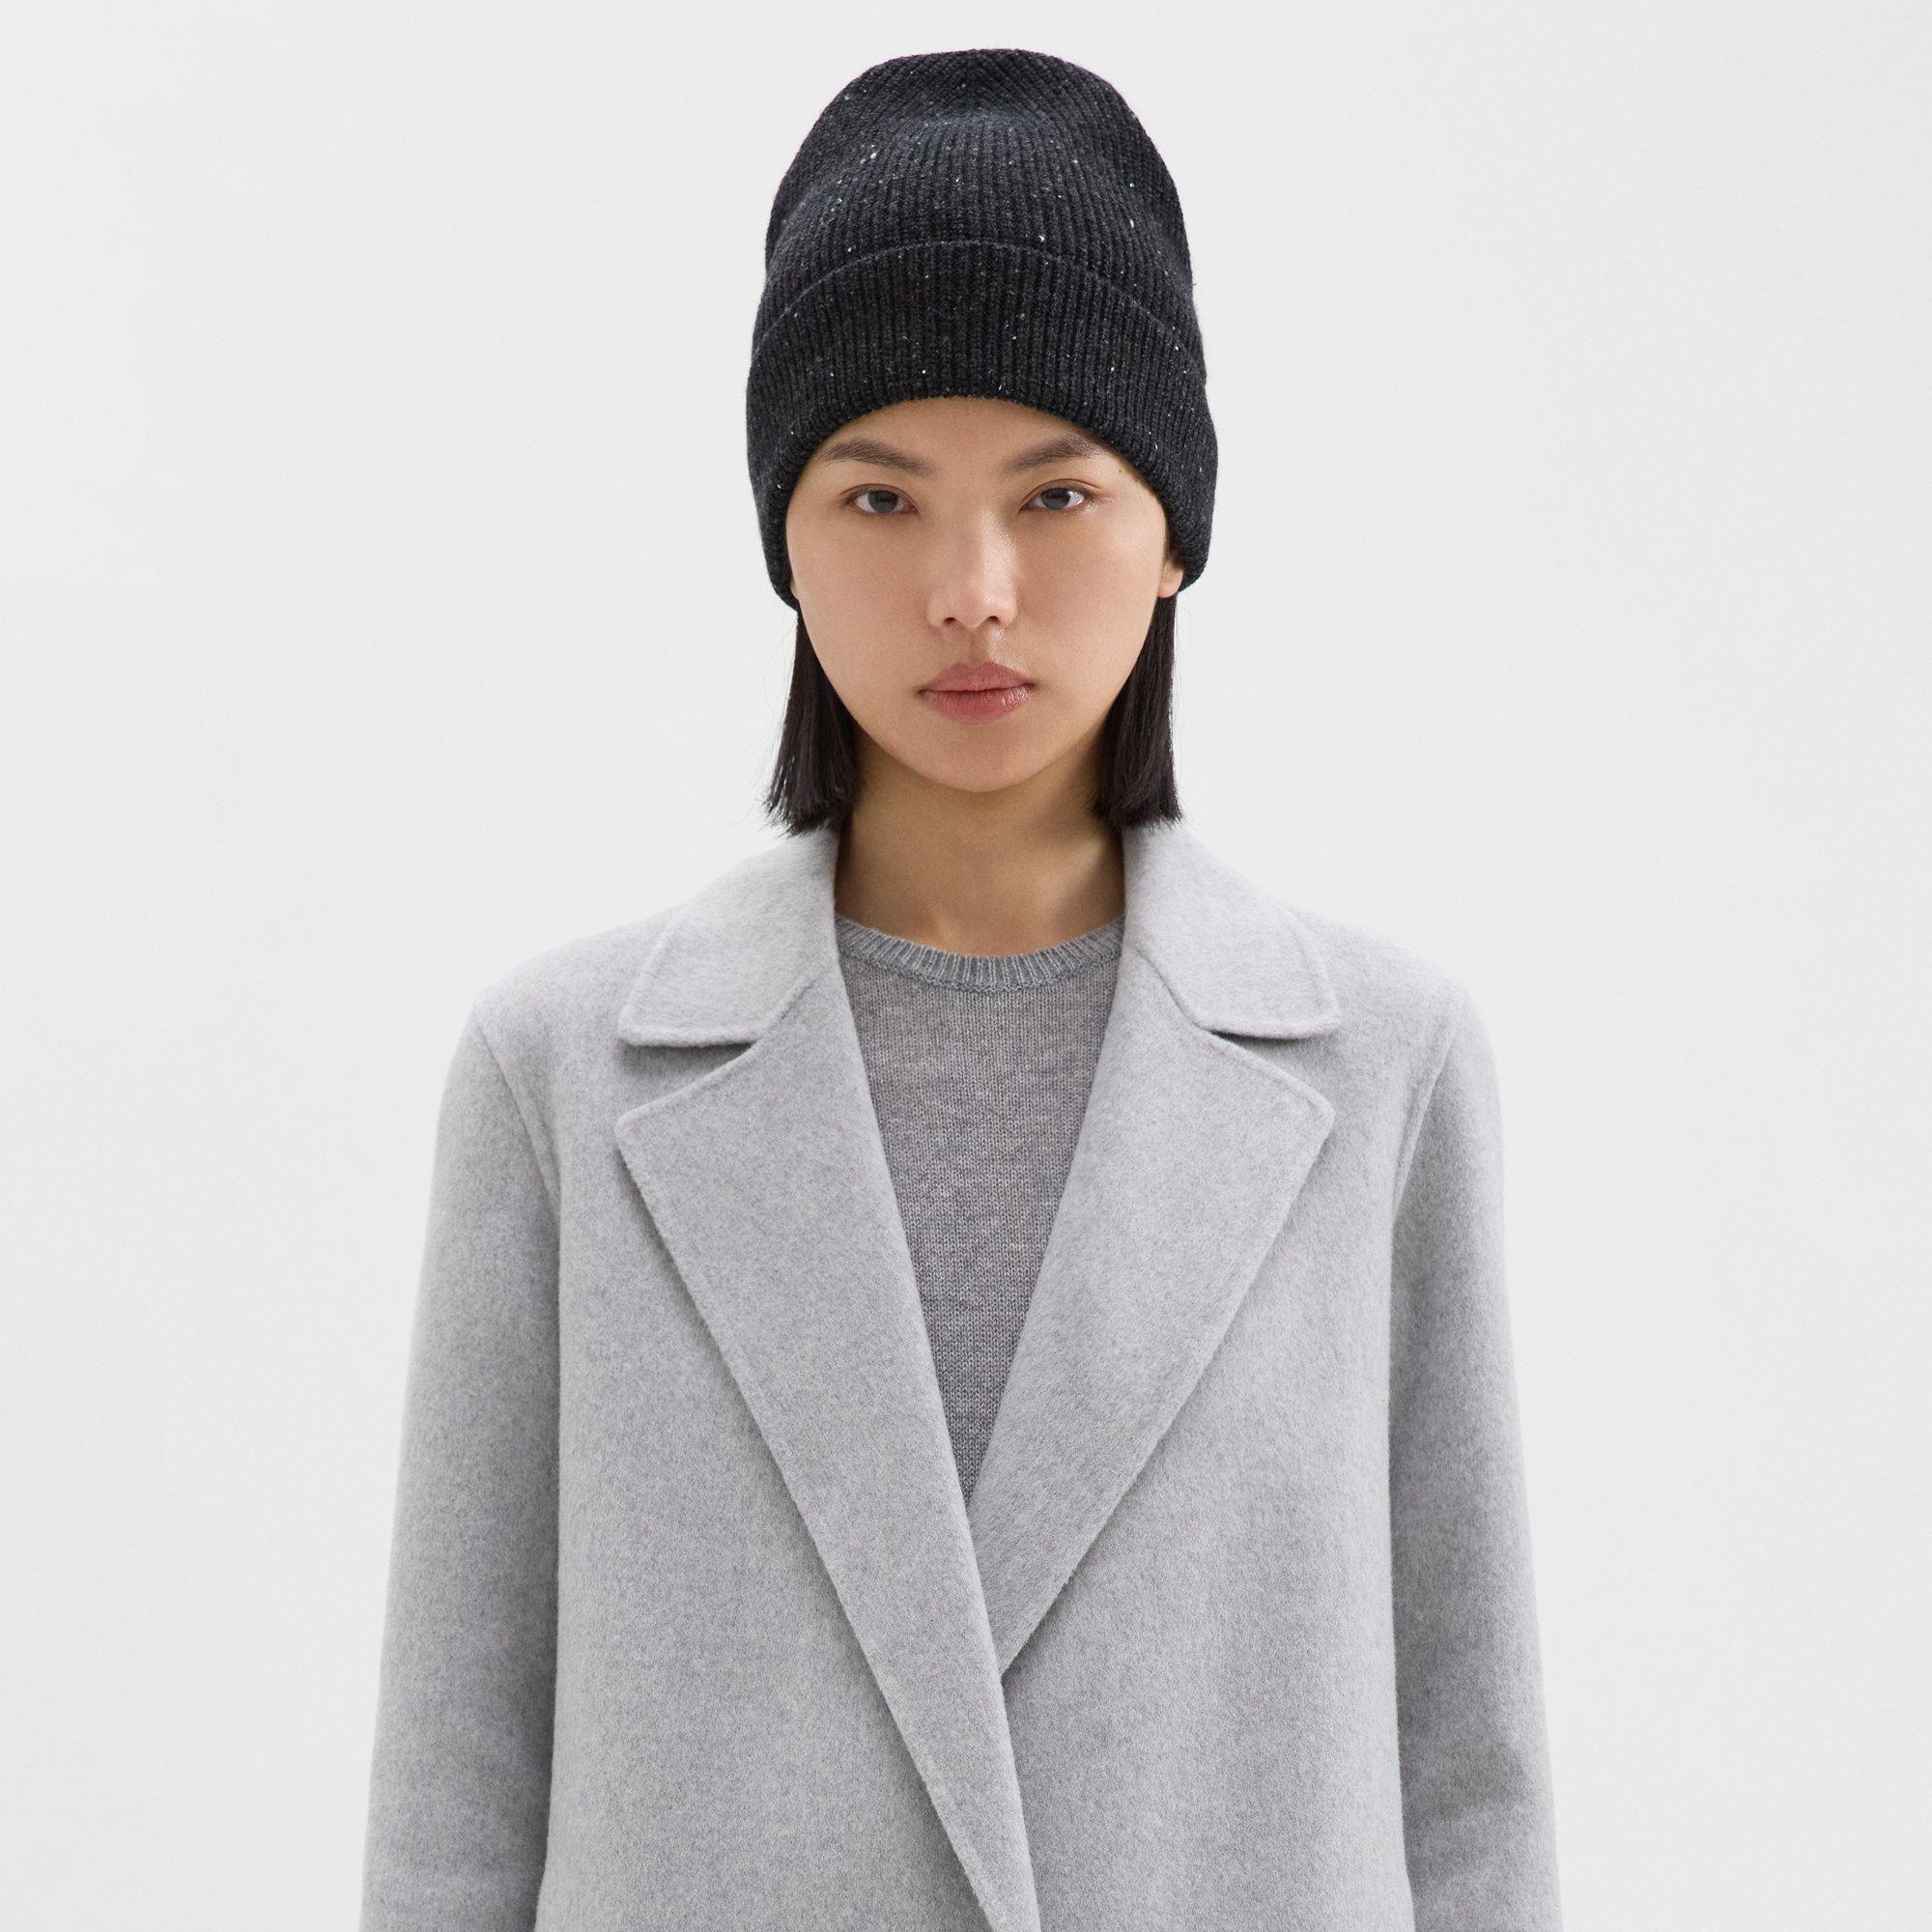 M484 Black Women Cute Bow Warm Cashmere Wool Winter Beret Beanie Hat SKI Cap